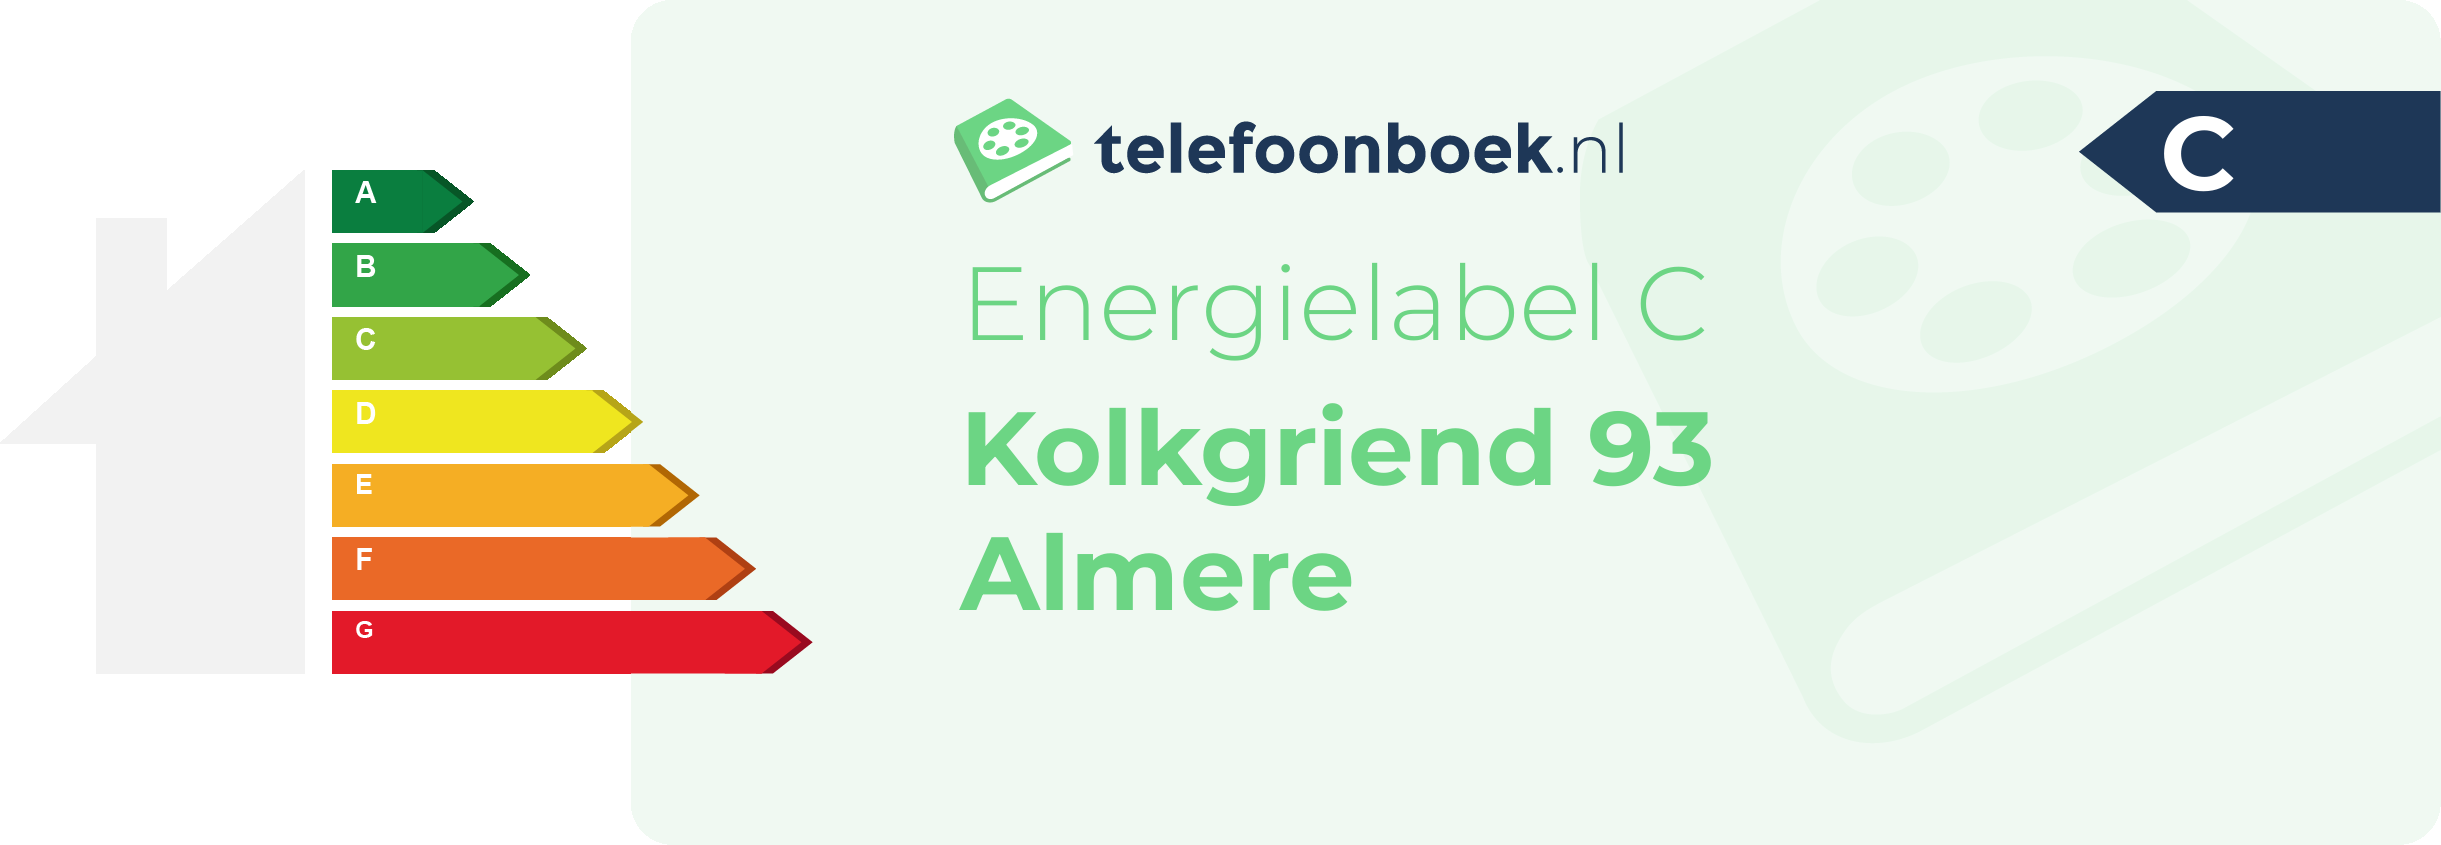 Energielabel Kolkgriend 93 Almere